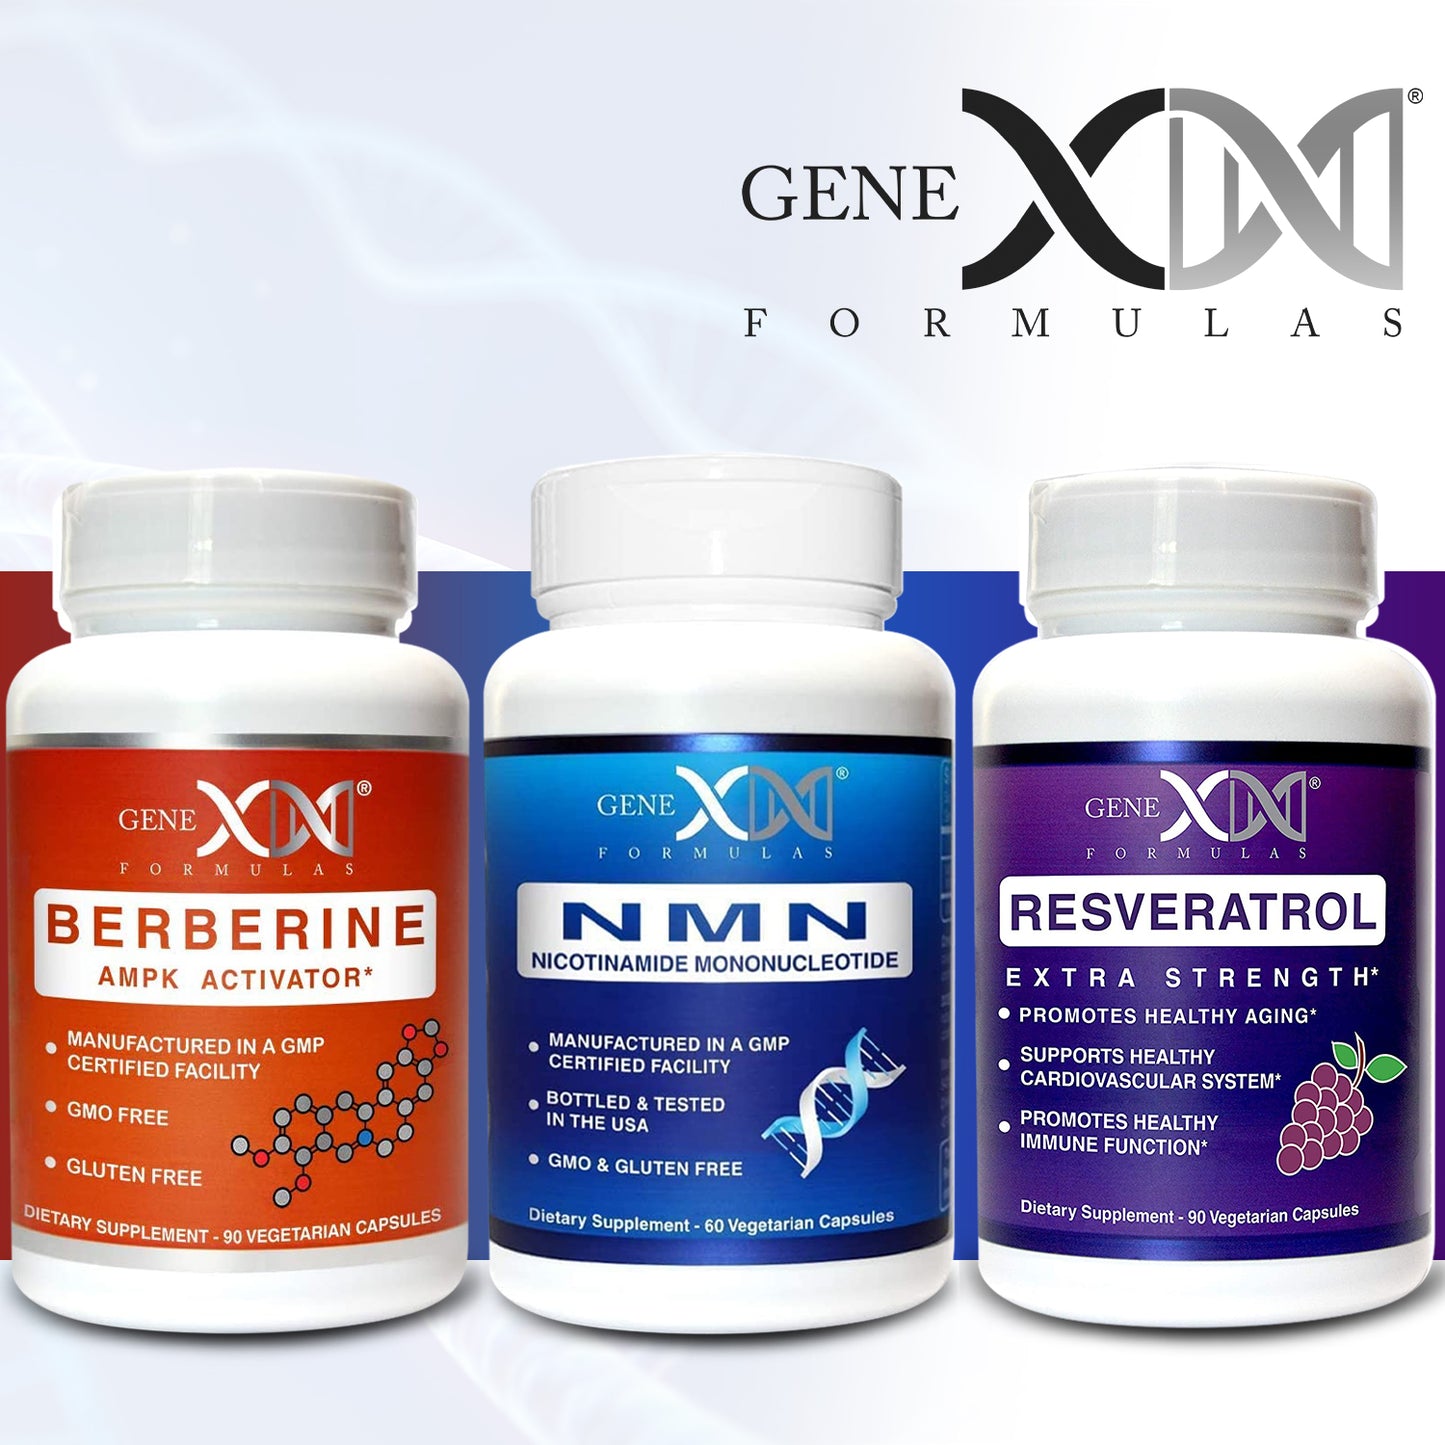 NMN, Resveratrol & Berberine Power Pack